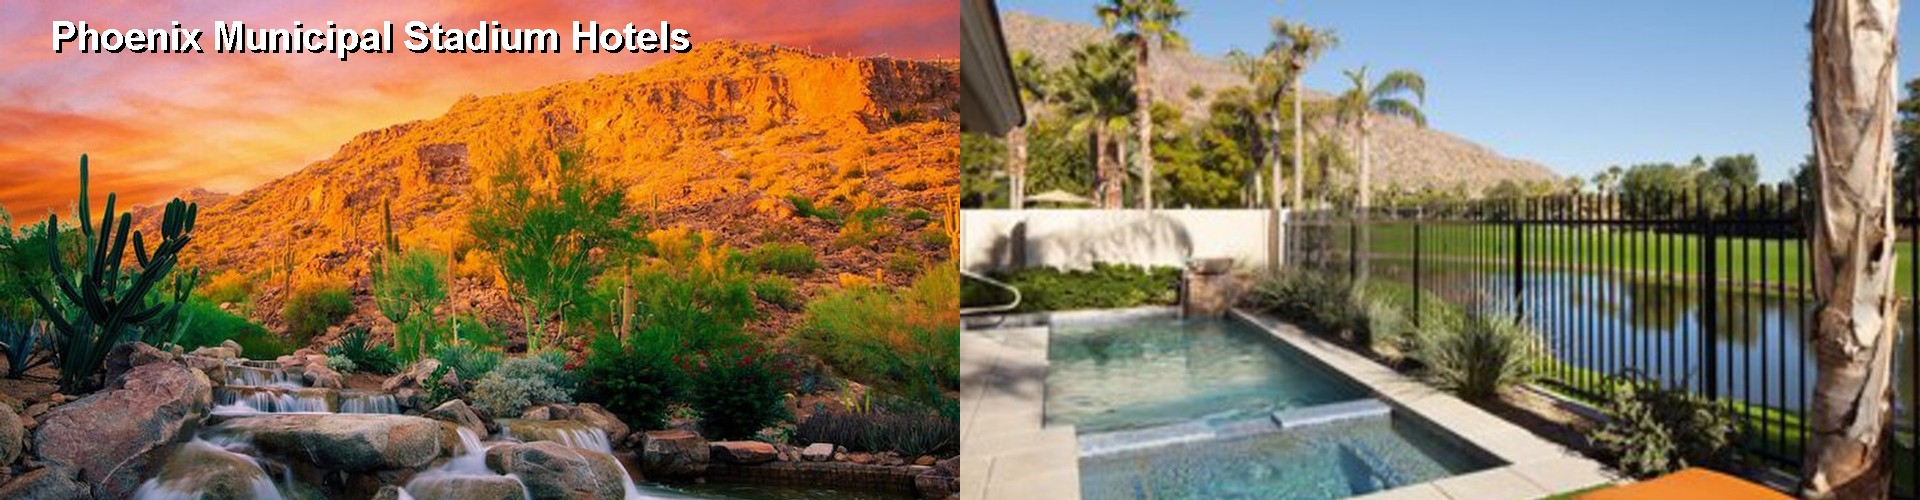 2 Best Hotels near Phoenix Municipal Stadium